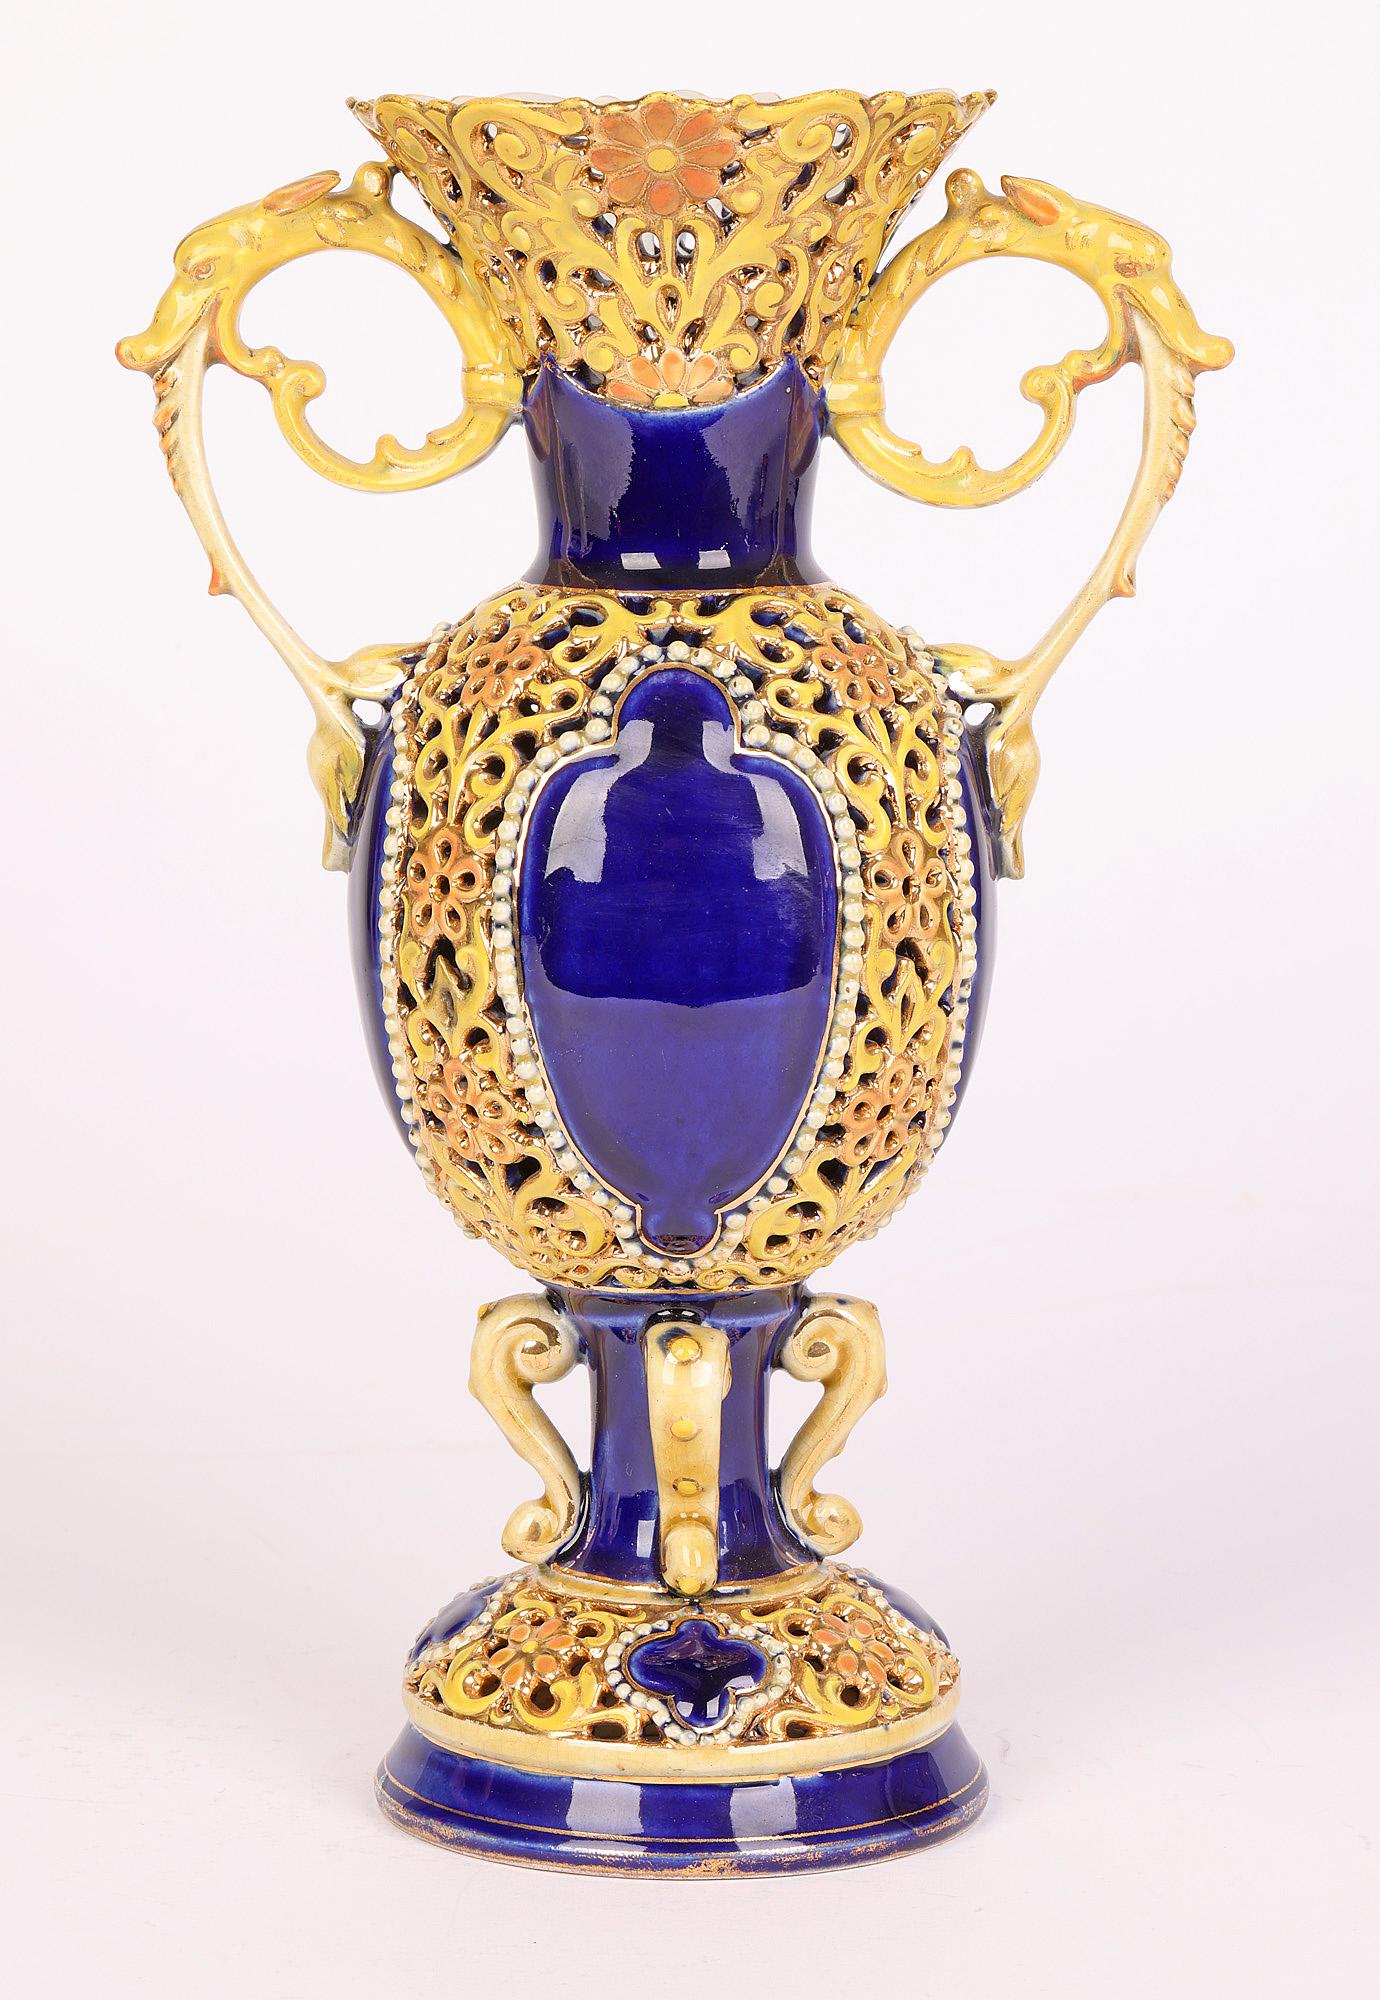 zsolnay porcelain vase